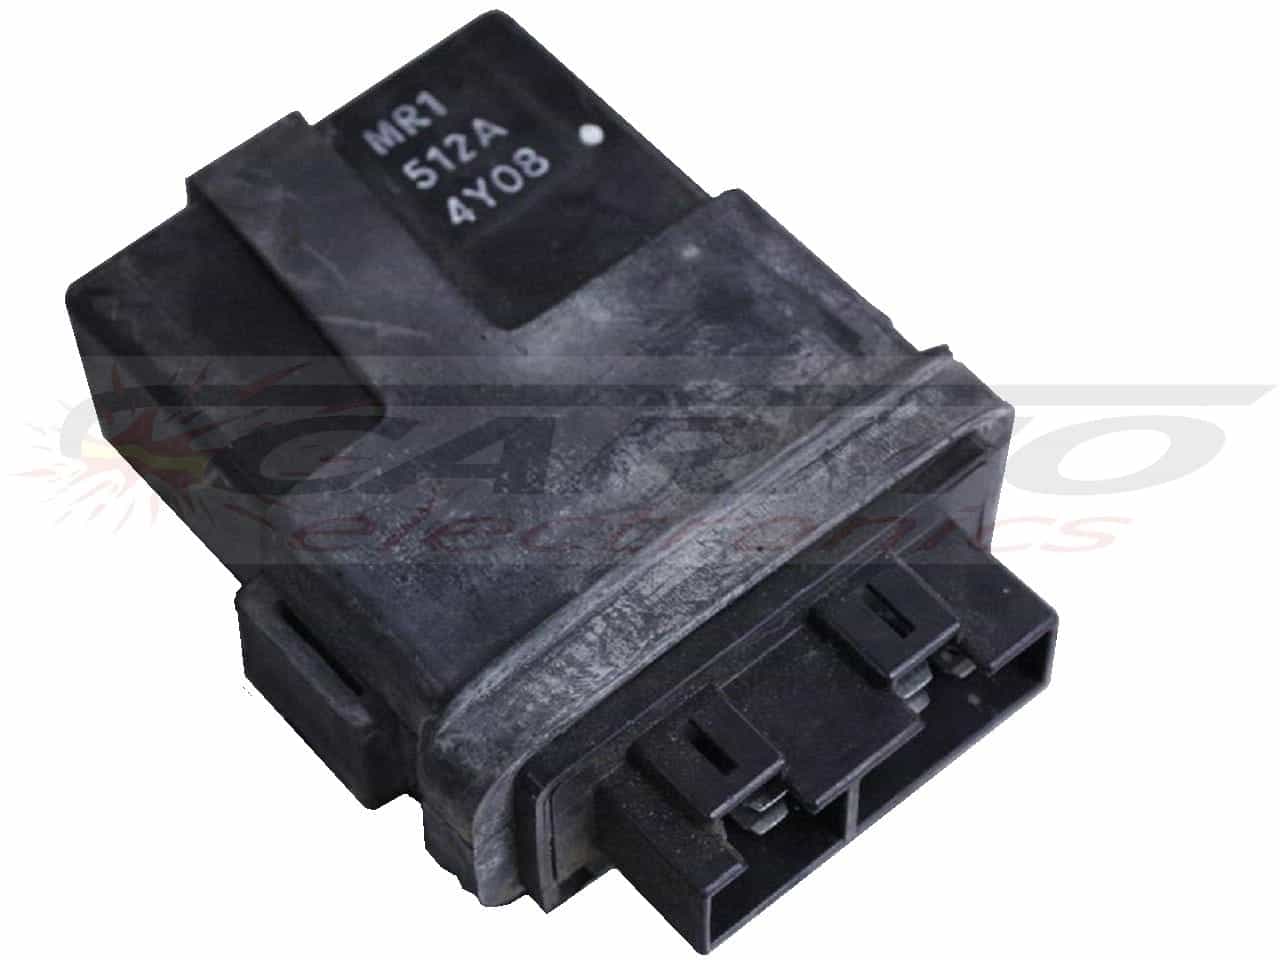 VLX400 igniter ignition module CDI TCI Box (MR1 512A)